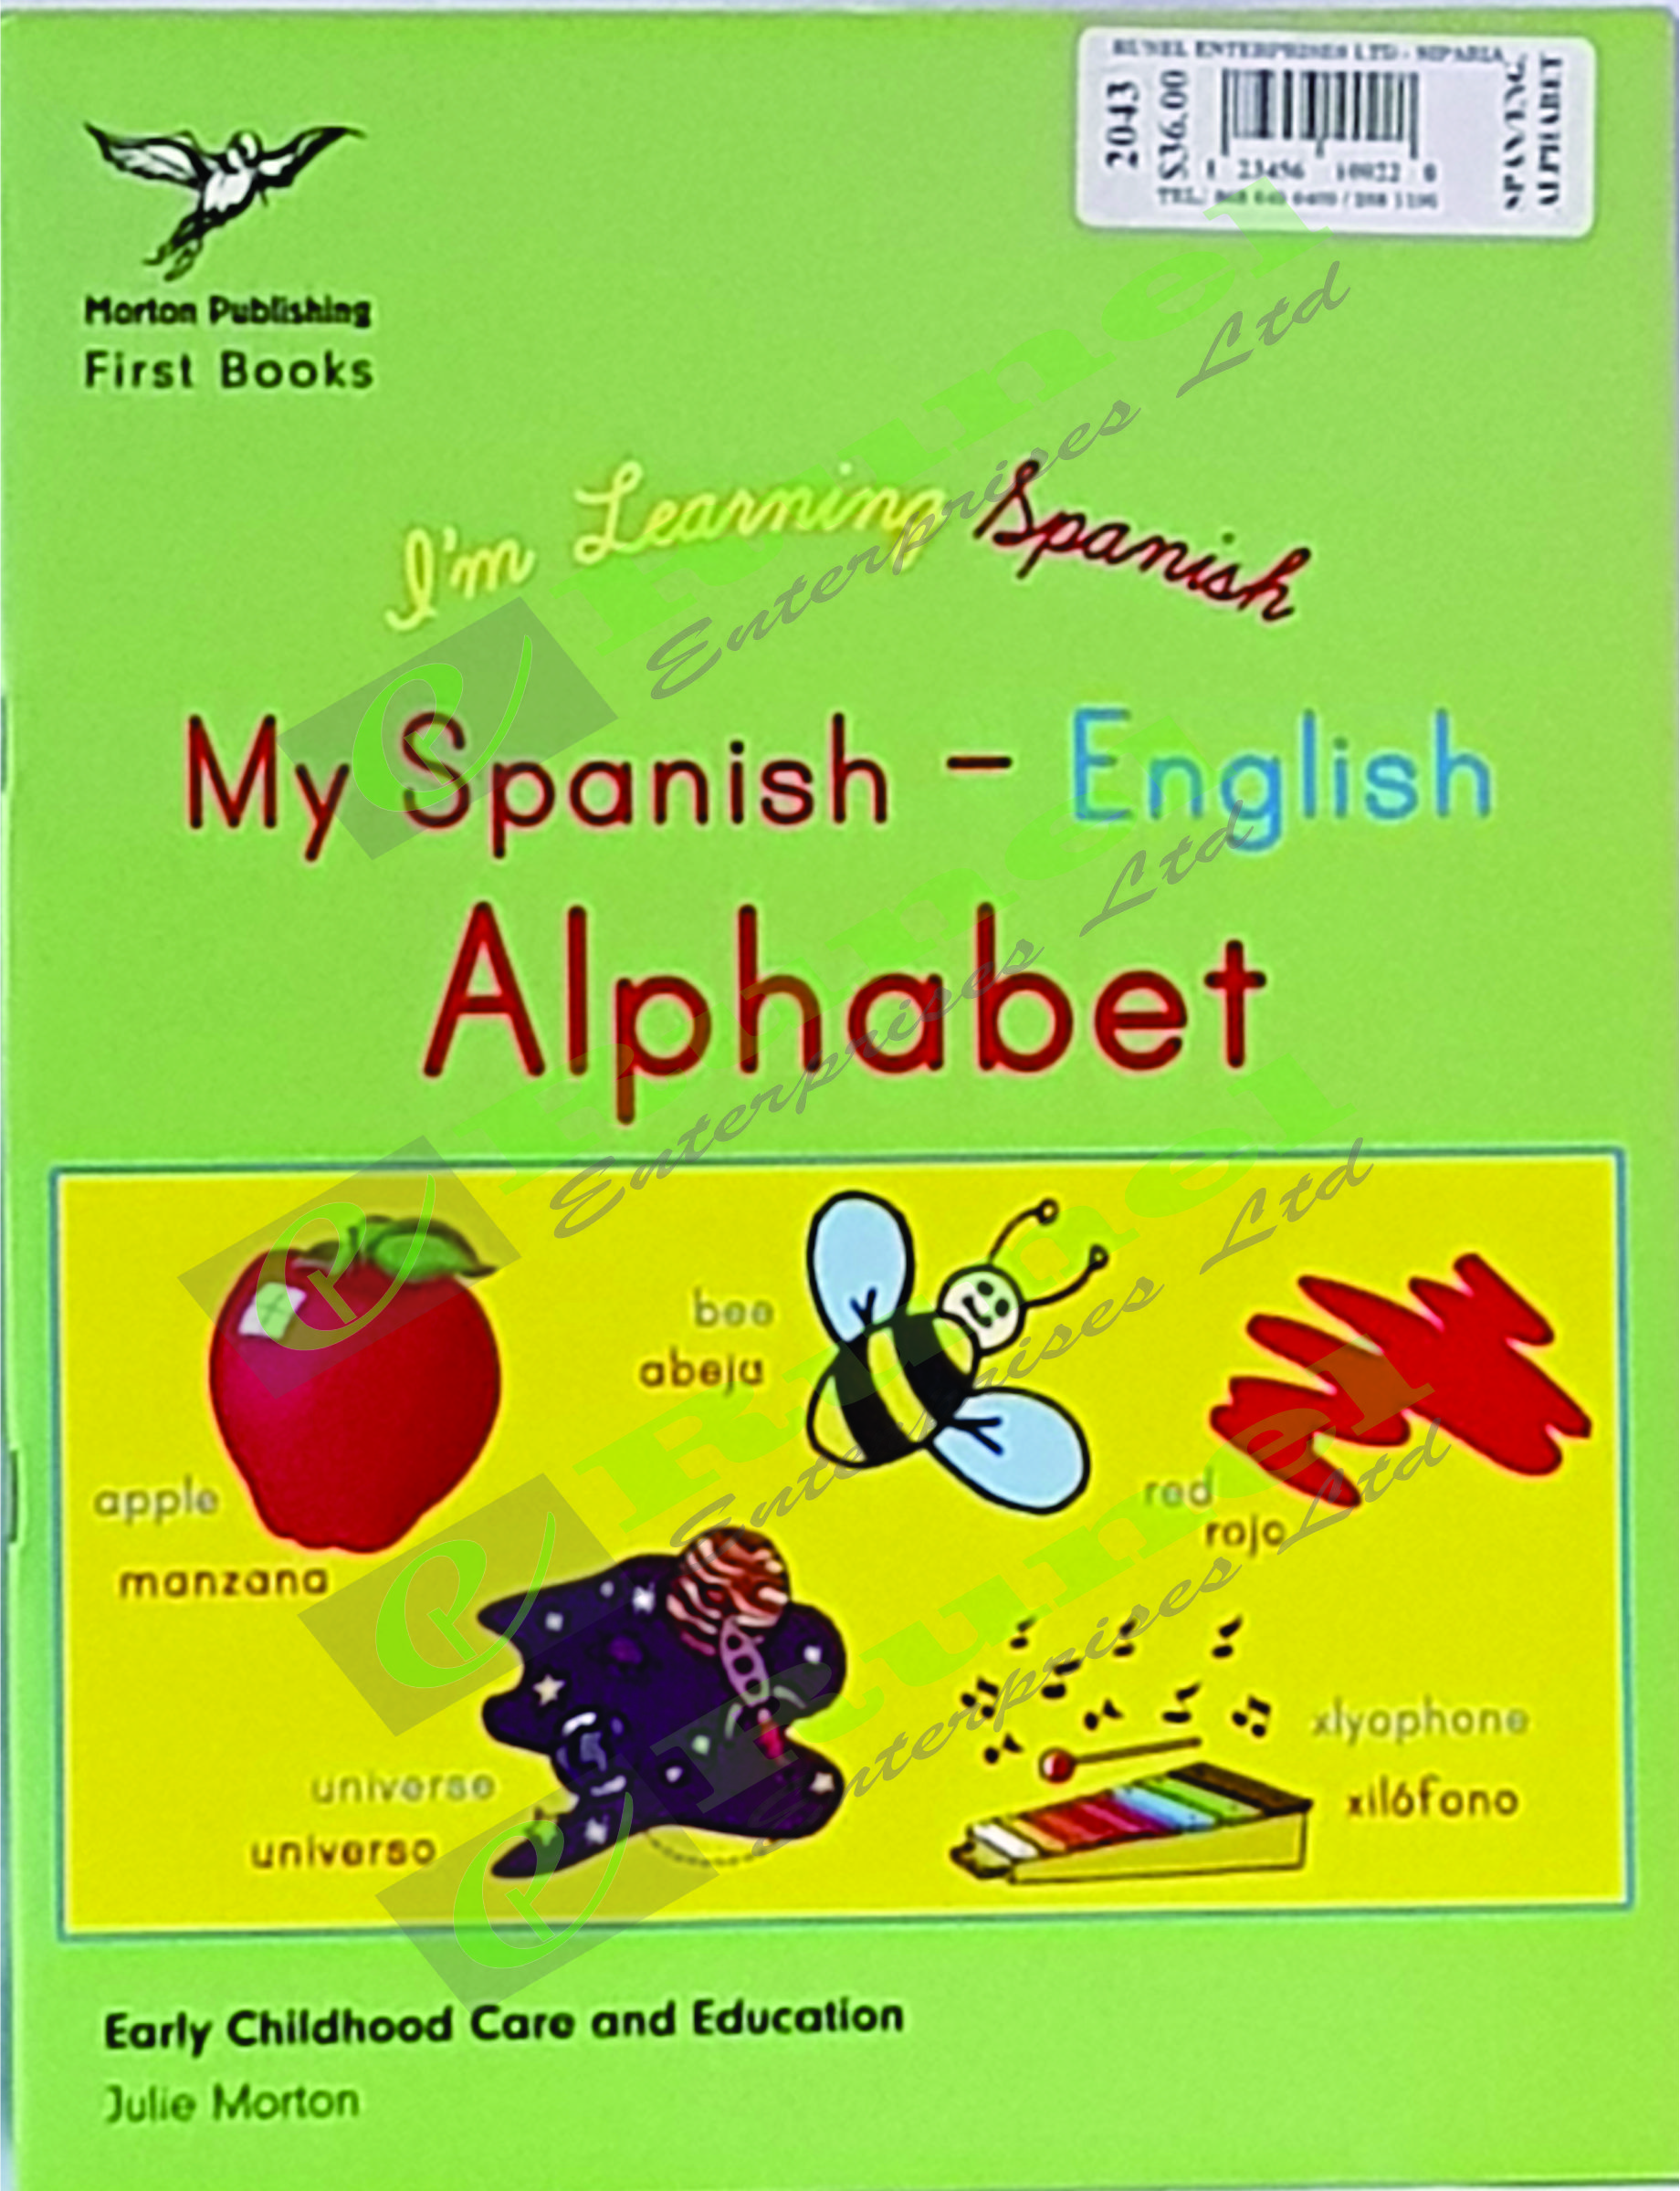 My Spanish - English Alphabet